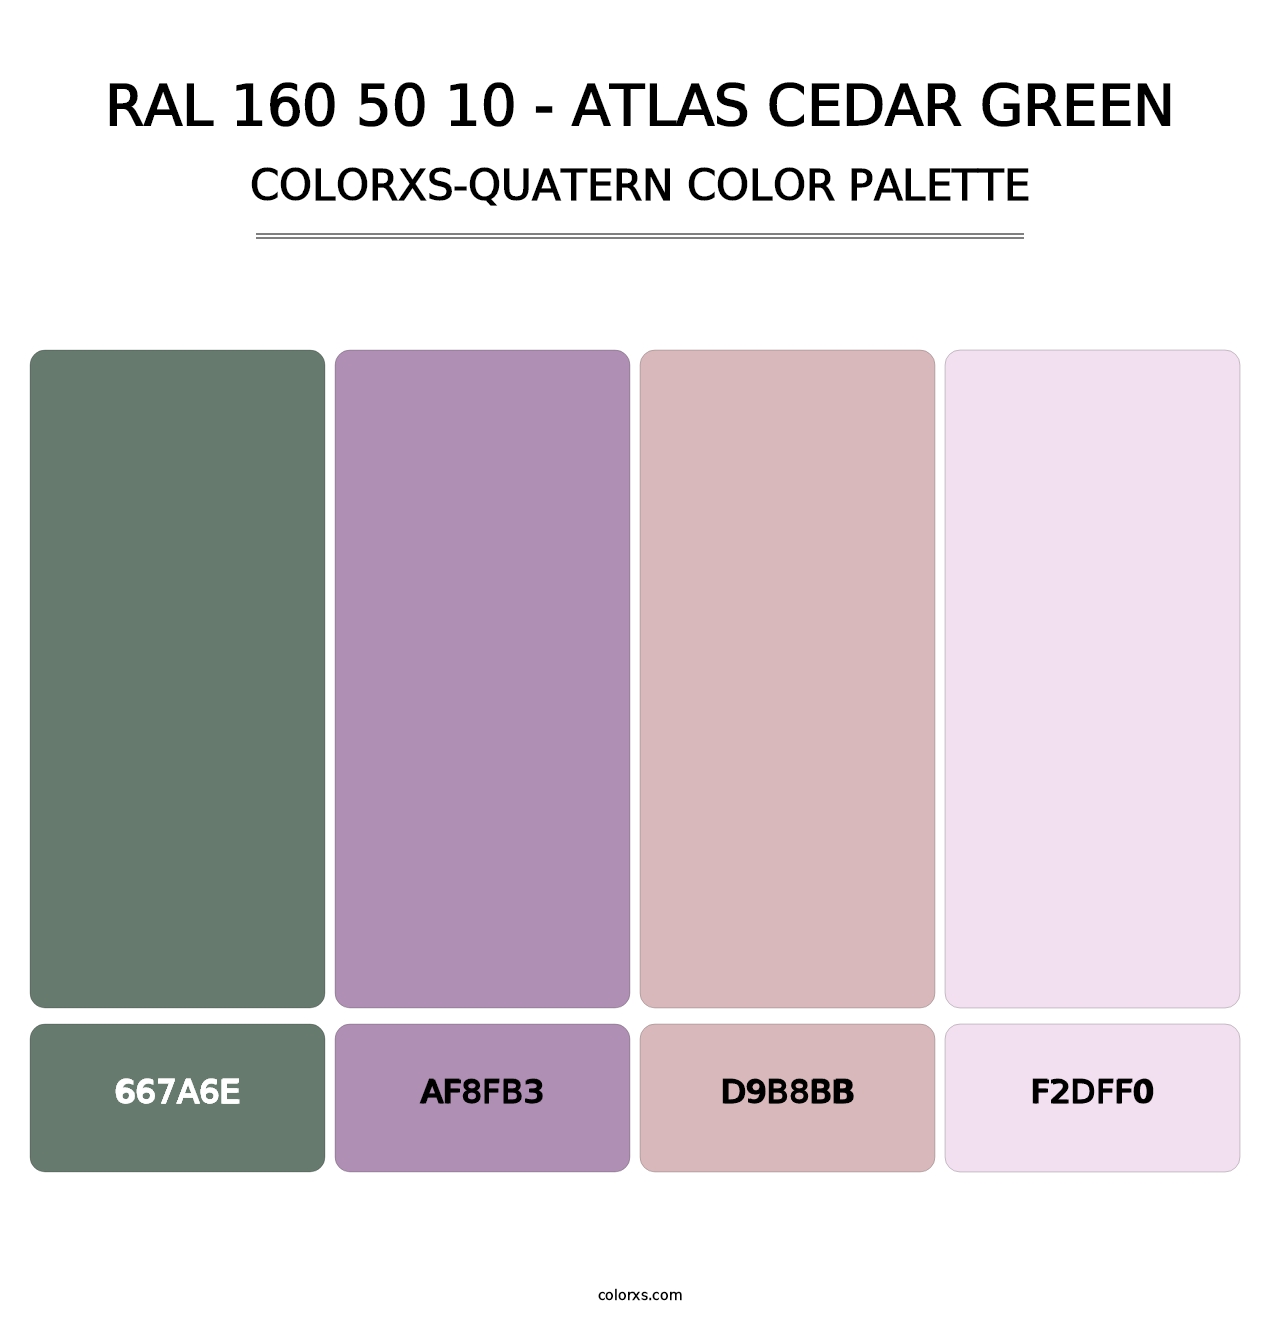 RAL 160 50 10 - Atlas Cedar Green - Colorxs Quatern Palette